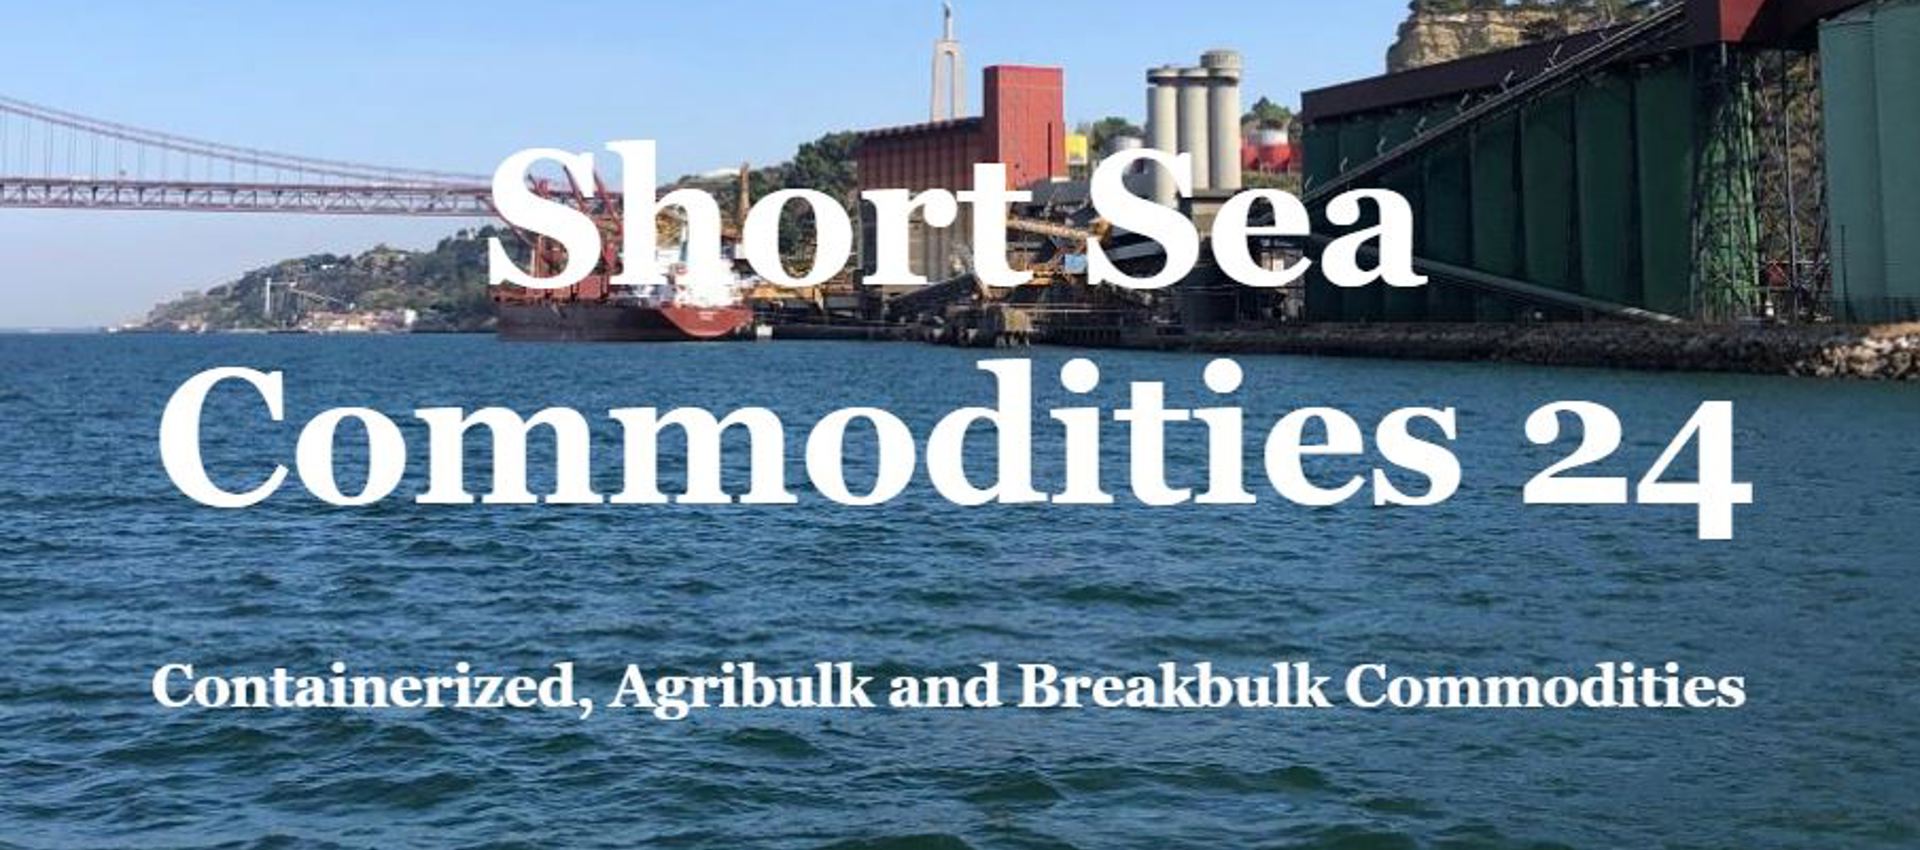 Short Sea Commodities 24